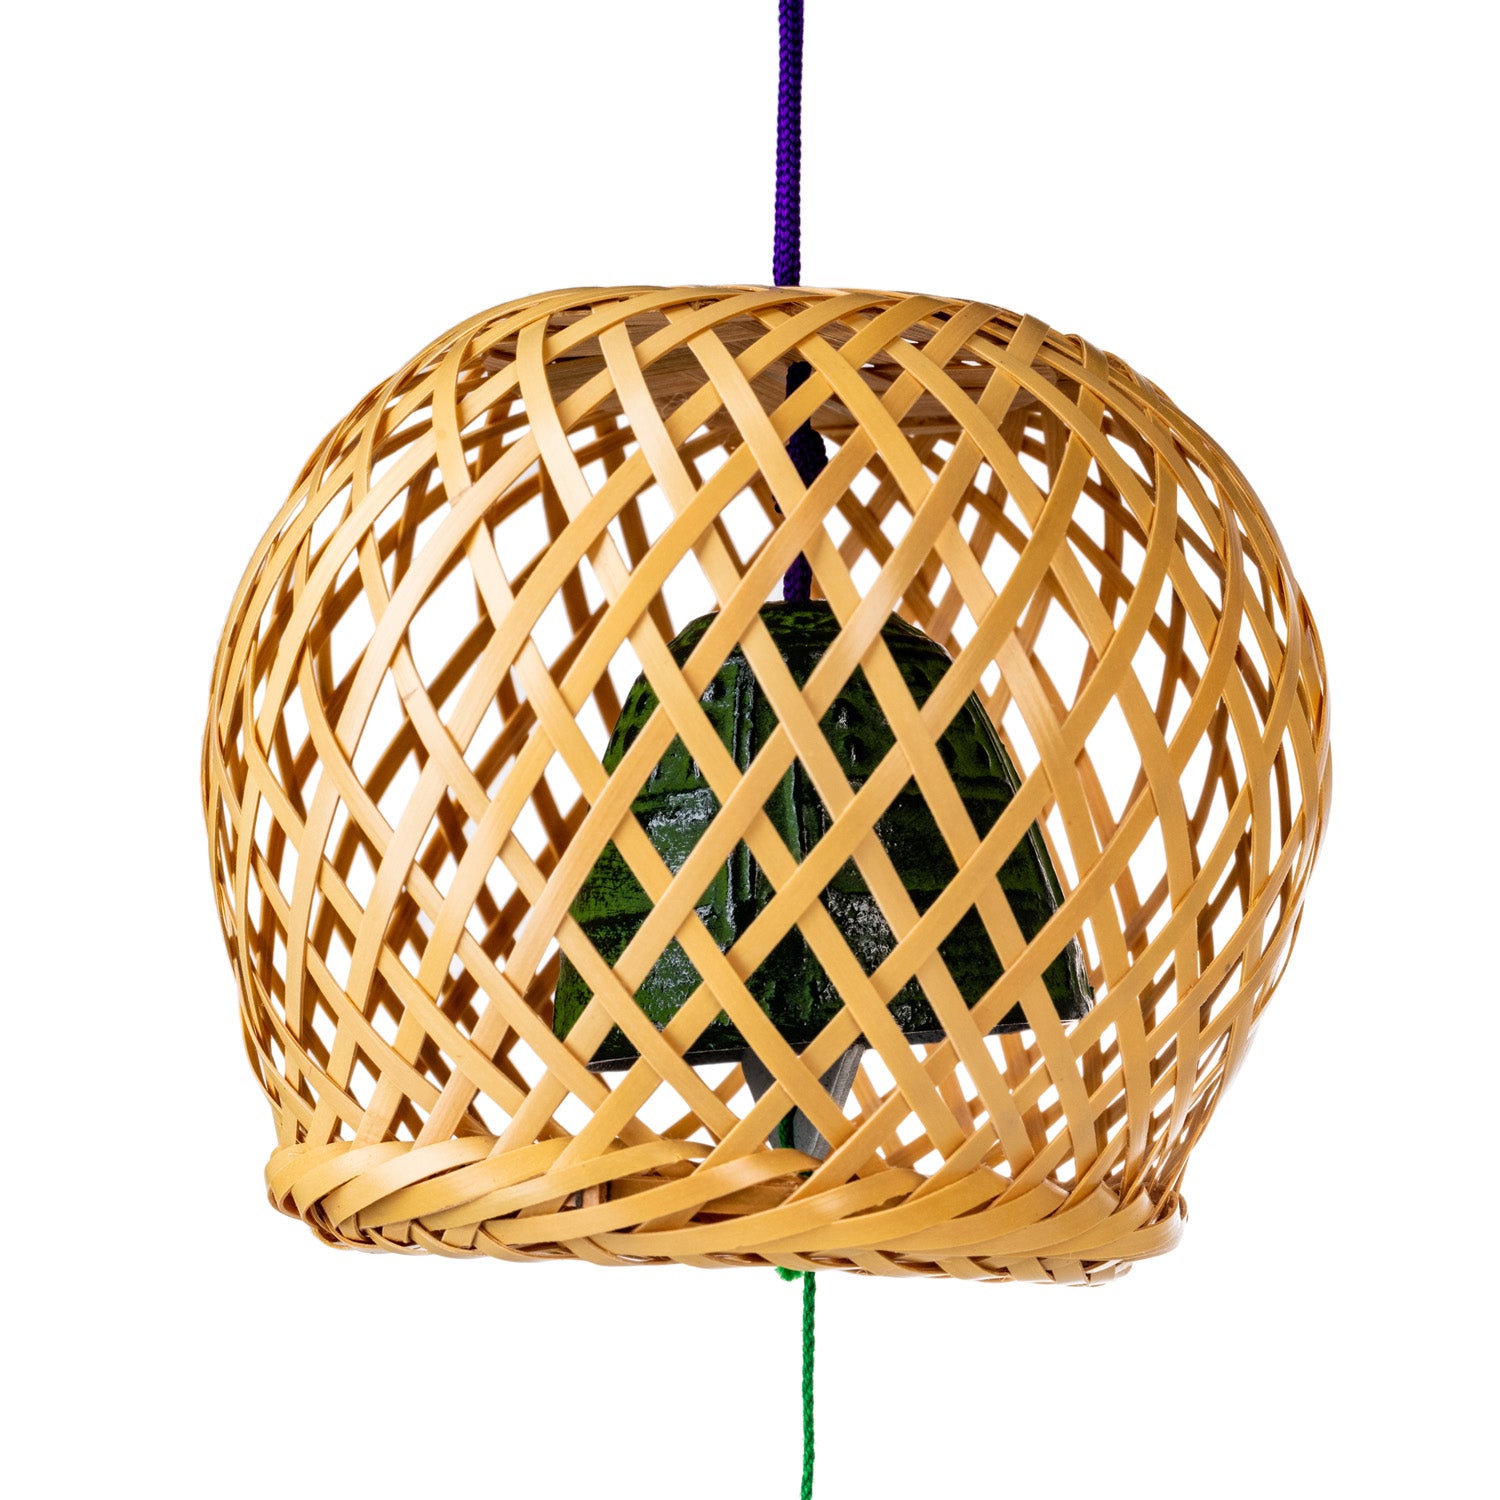 Wicker Basket and Cast Iron Japanese Windchime